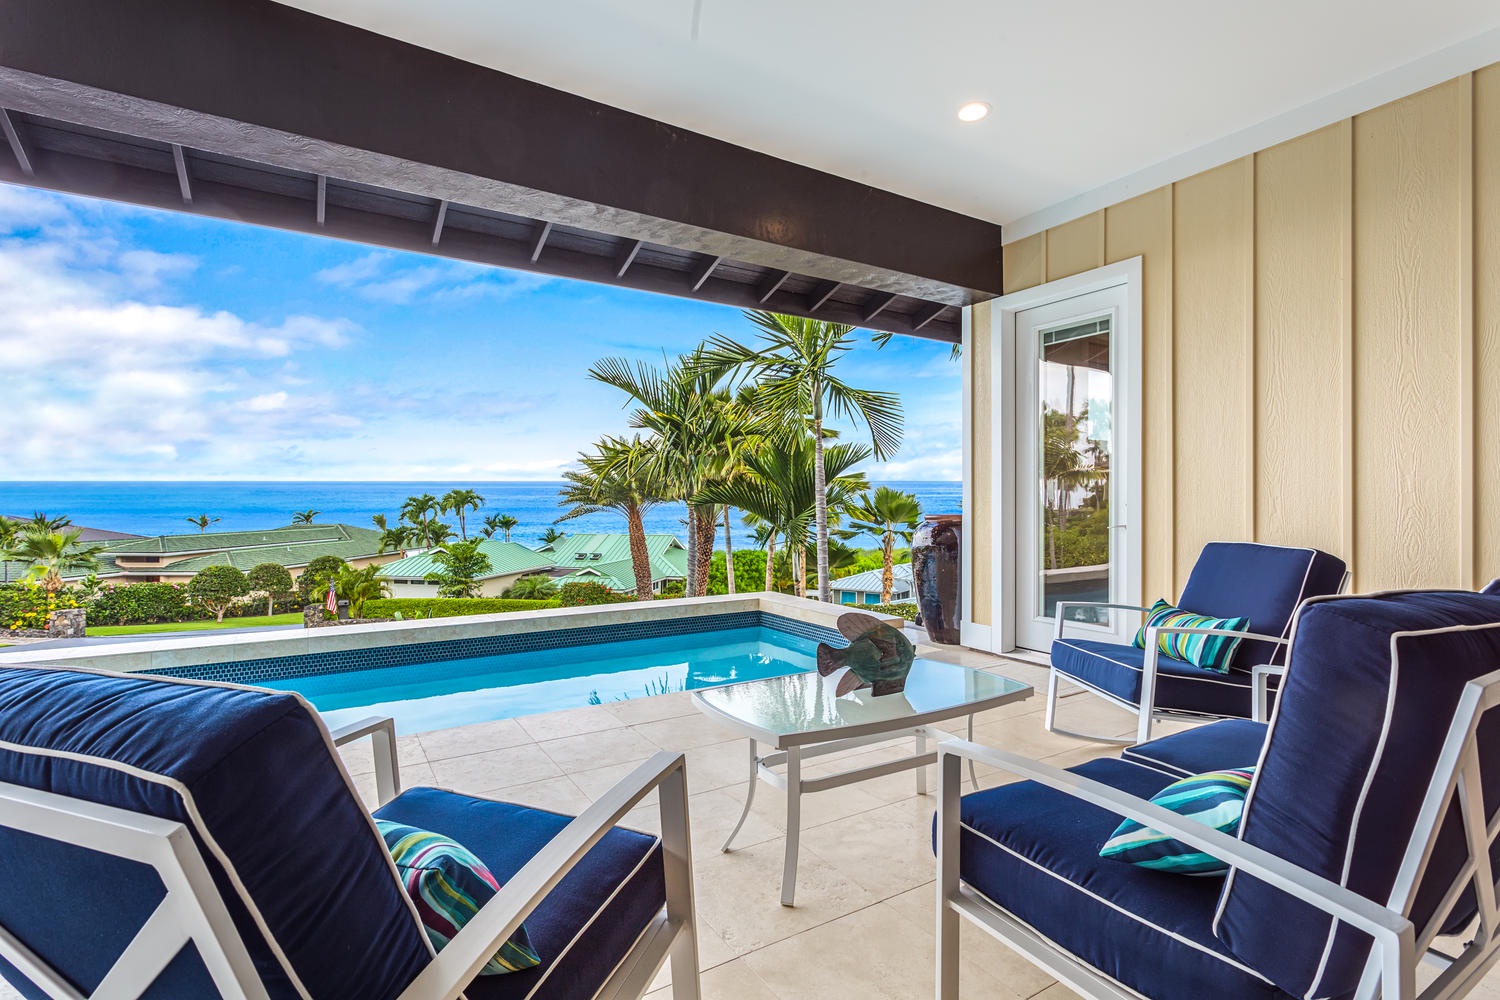 Kailua Kona Vacation Rentals, Ohana le'ale'a - Welcome to Ohana Le'ale'a by Gather, a newly built luxury 3 bedroom, 3.5 bath home, perfect for your next family getaway